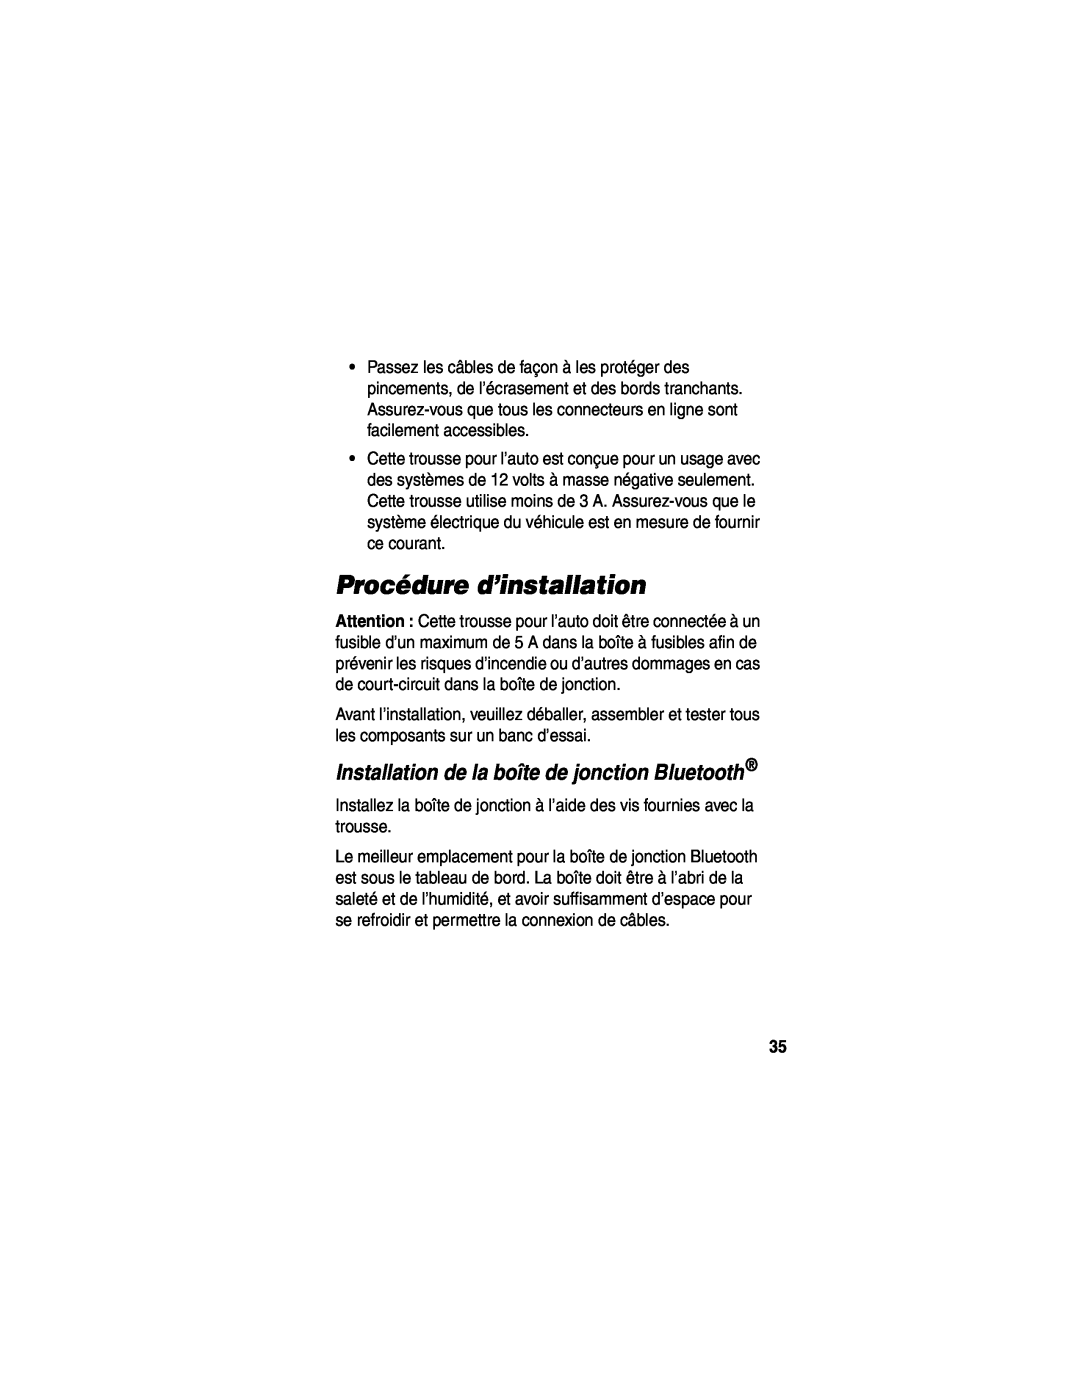 Motorola HF850 manual Procédure d’installation, Installation de la boîte de jonction Bluetooth 